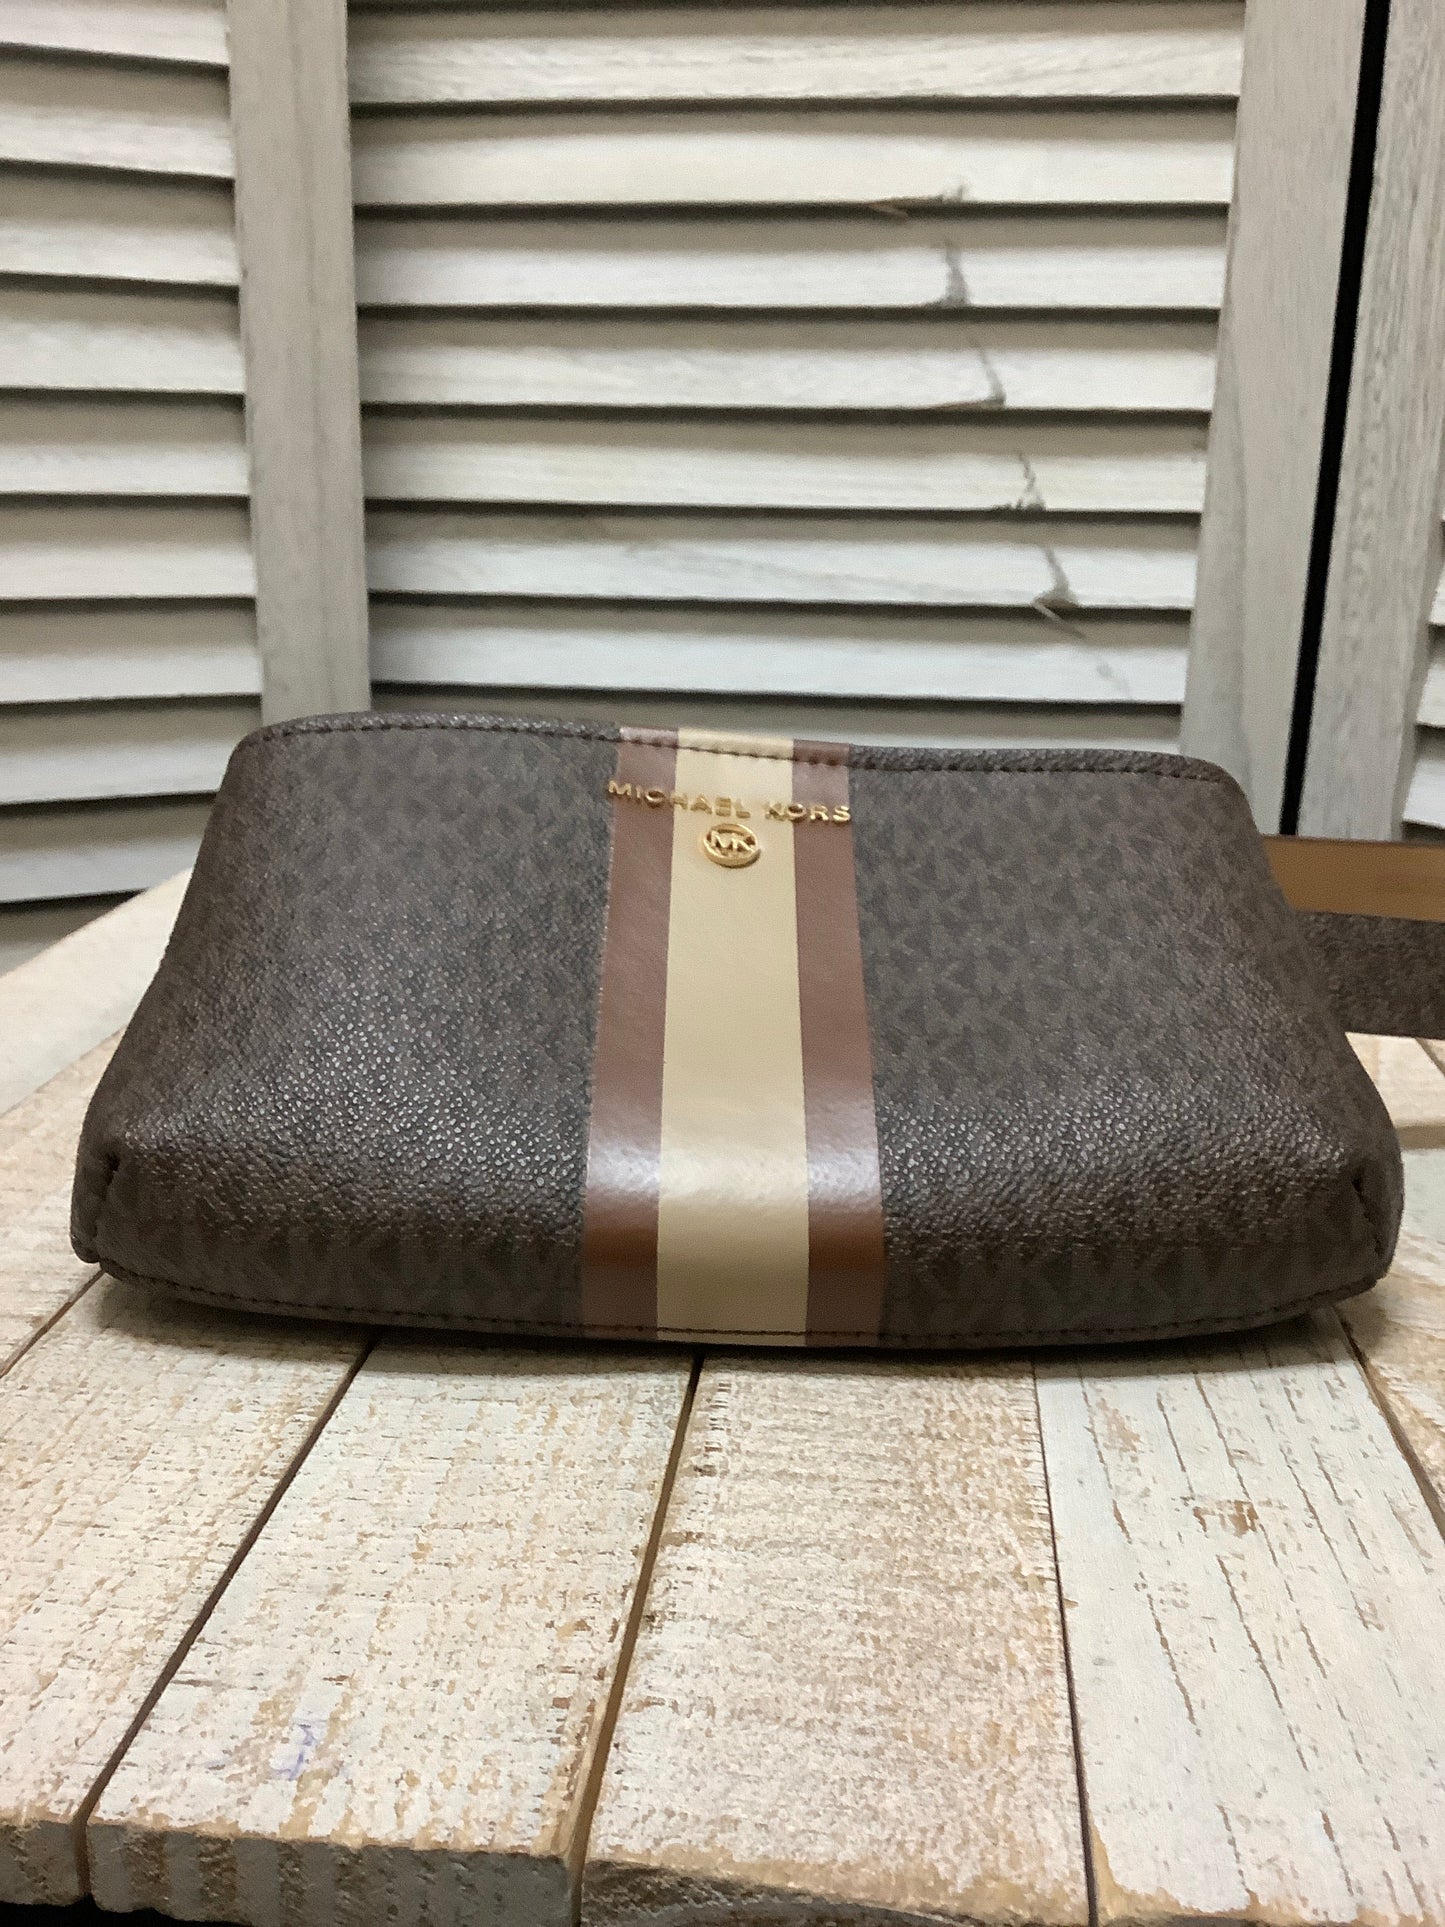 Belt Bag Designer By Michael Kors  Size: Medium